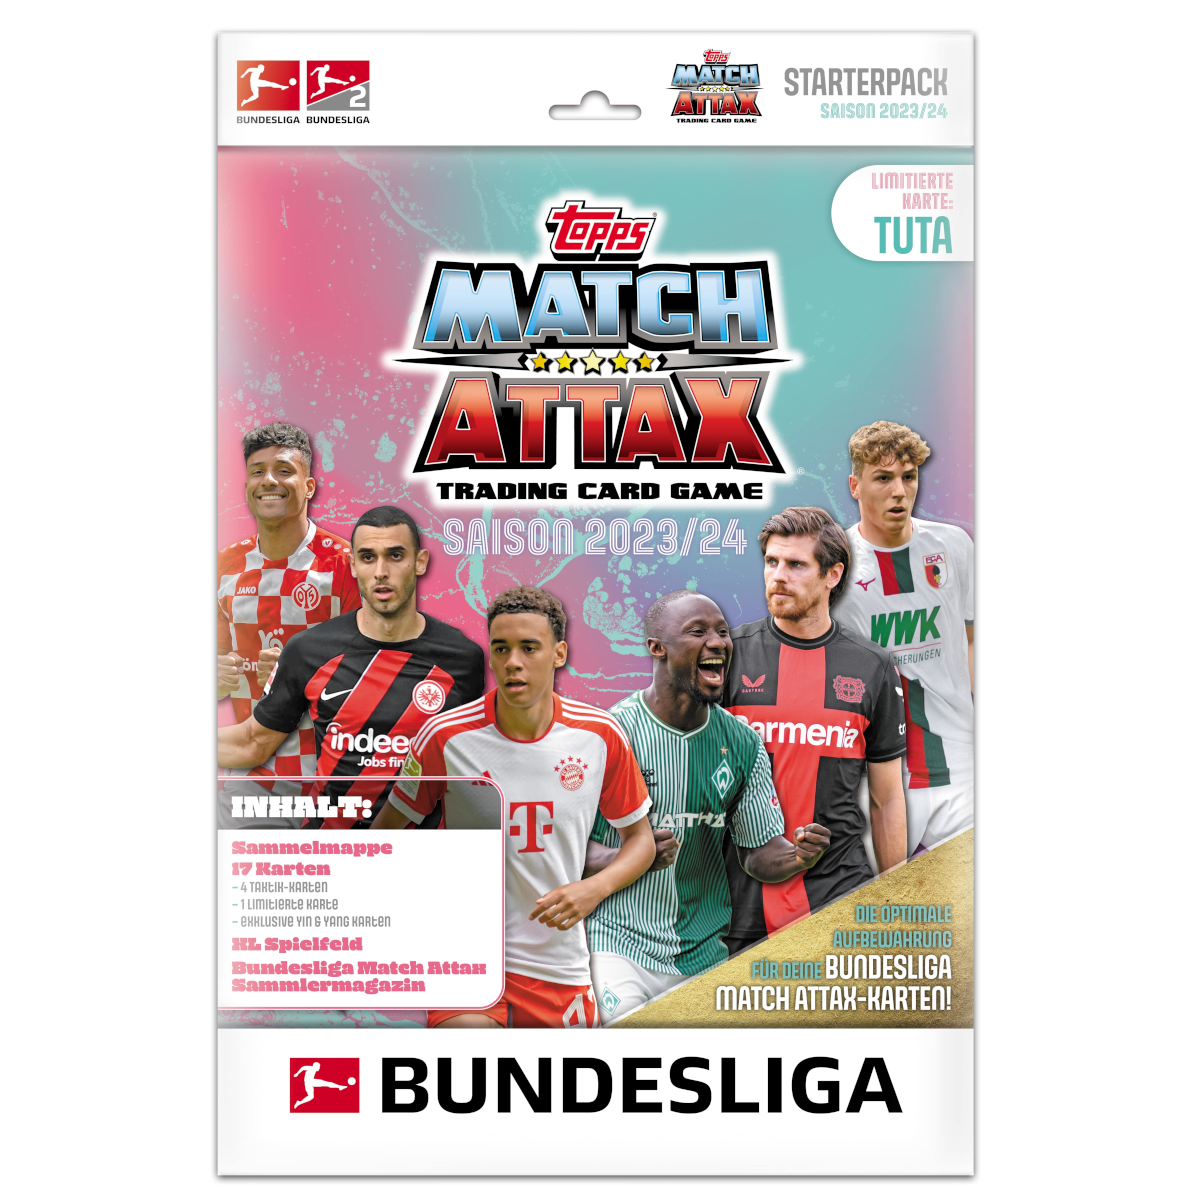 Neue Saison, neue Stars, neue Sammelaction: Bundesliga Match Attax